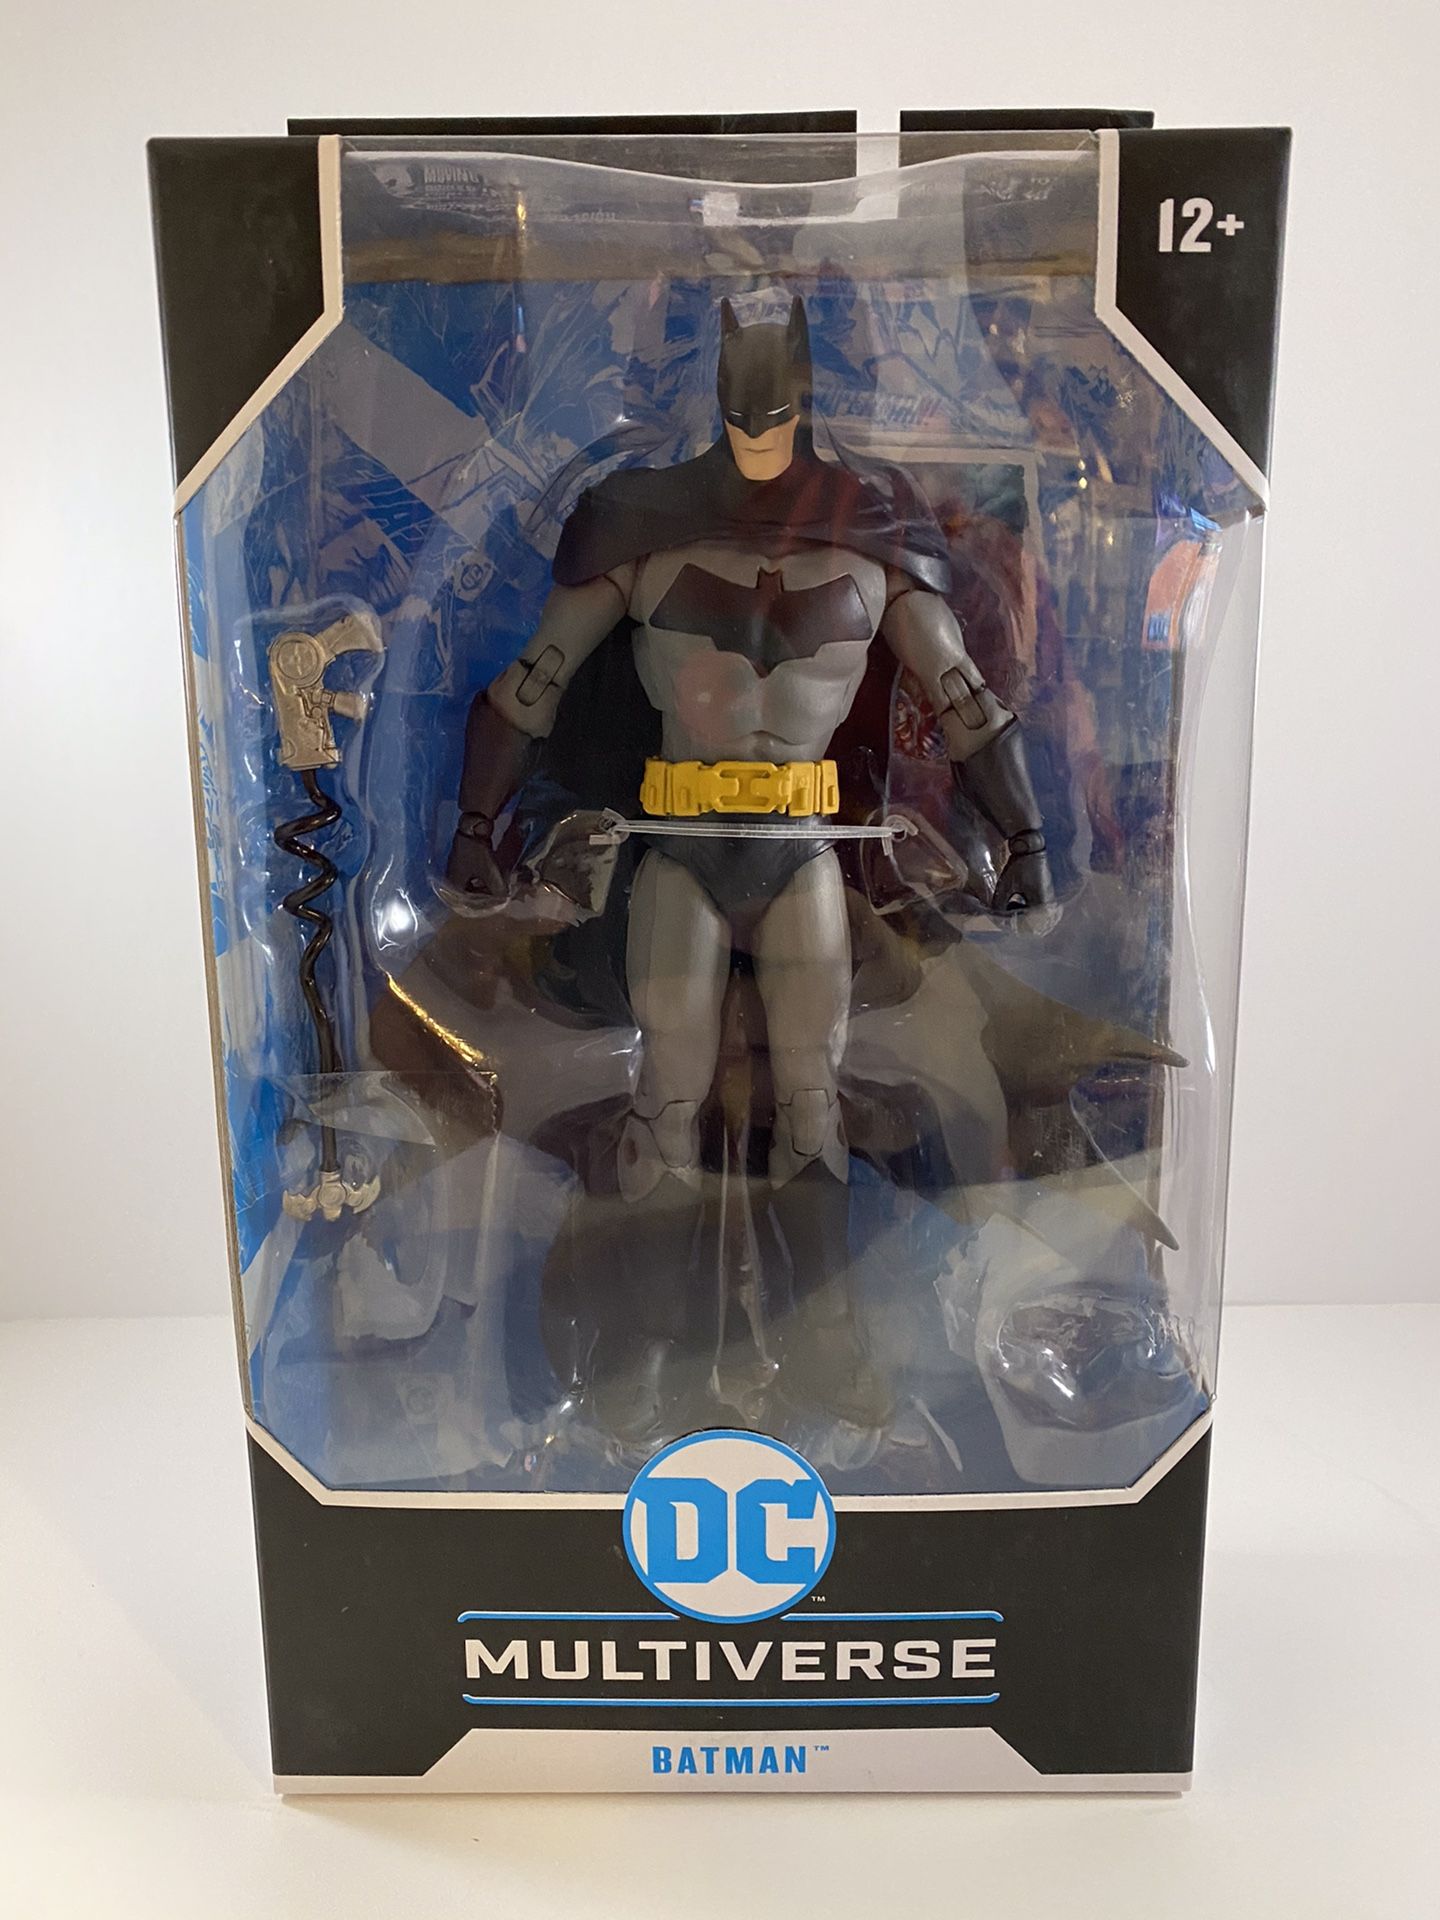 Mcfarlane Toys DC Multiverse Modern Comic Batman Collectible Action Figure